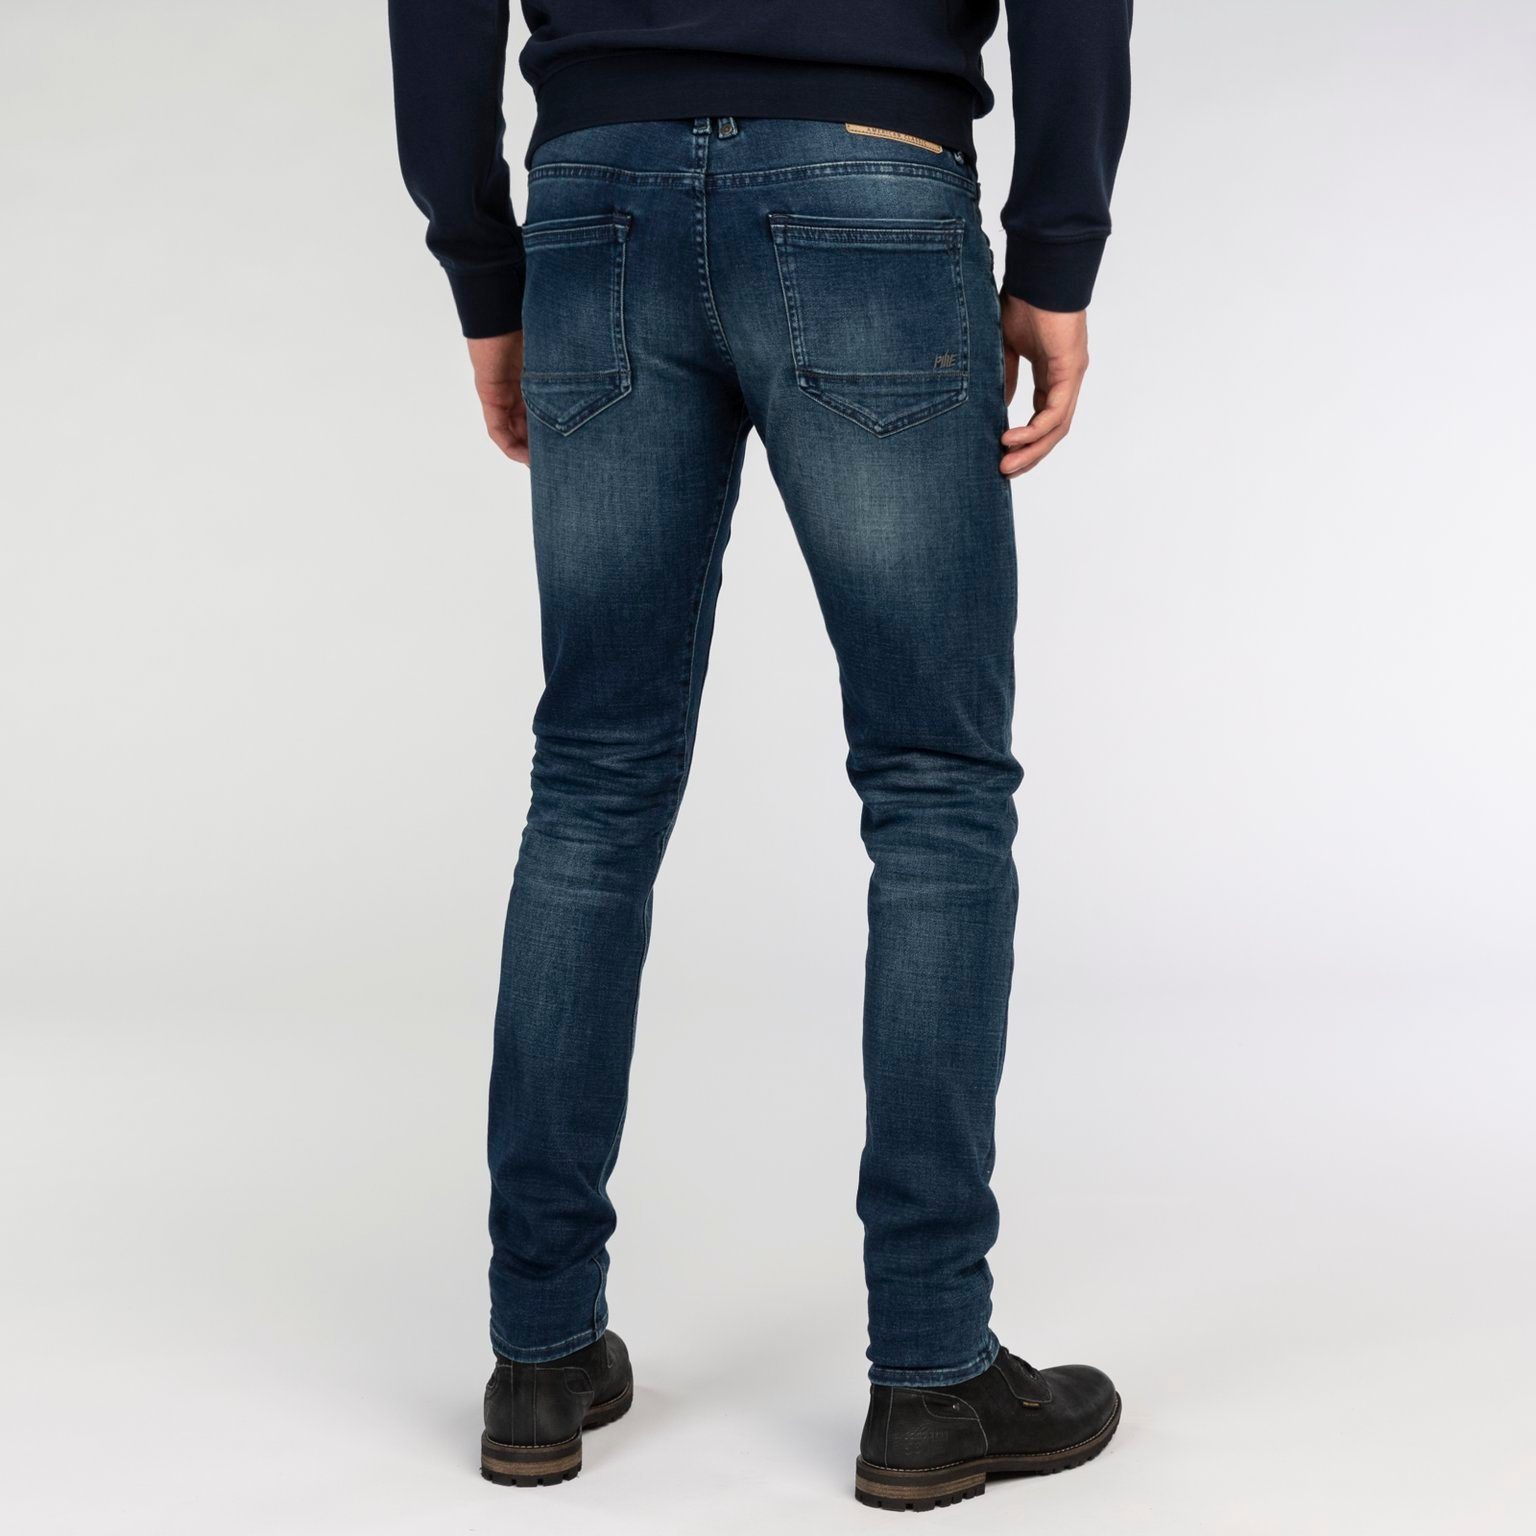 LEGEND PME dark PTR140-DBI TAILWHEEL PME LEGEND indigo blue 5-Pocket-Jeans